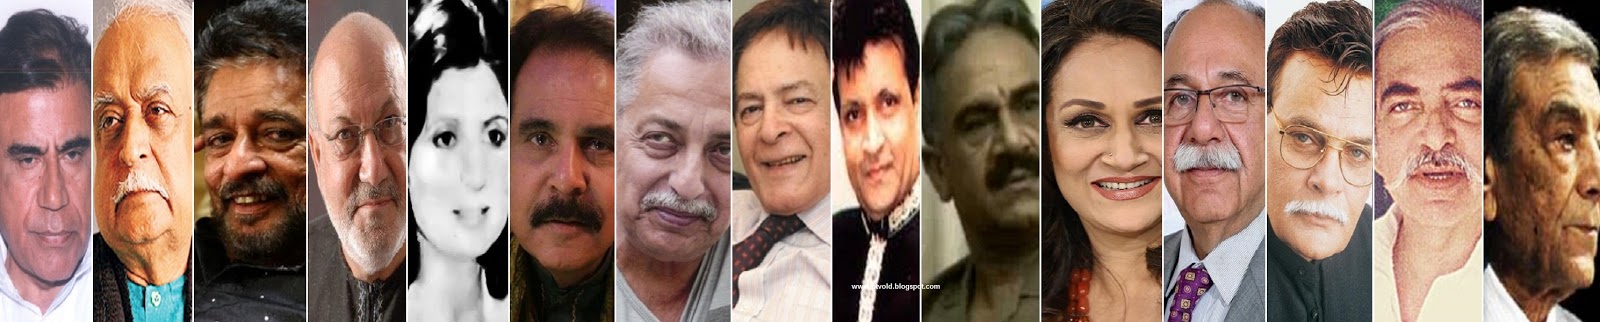 Legend actors of PTV Tariq Aziz, Anwar Maqsood, Ismail Tara, Ashraf Khan, Qavi Khan, Umer Sharif, Bushra Ansari, Arshad Mehmood, Shakeel, Zia Mohyuddin, Ali Ijaz